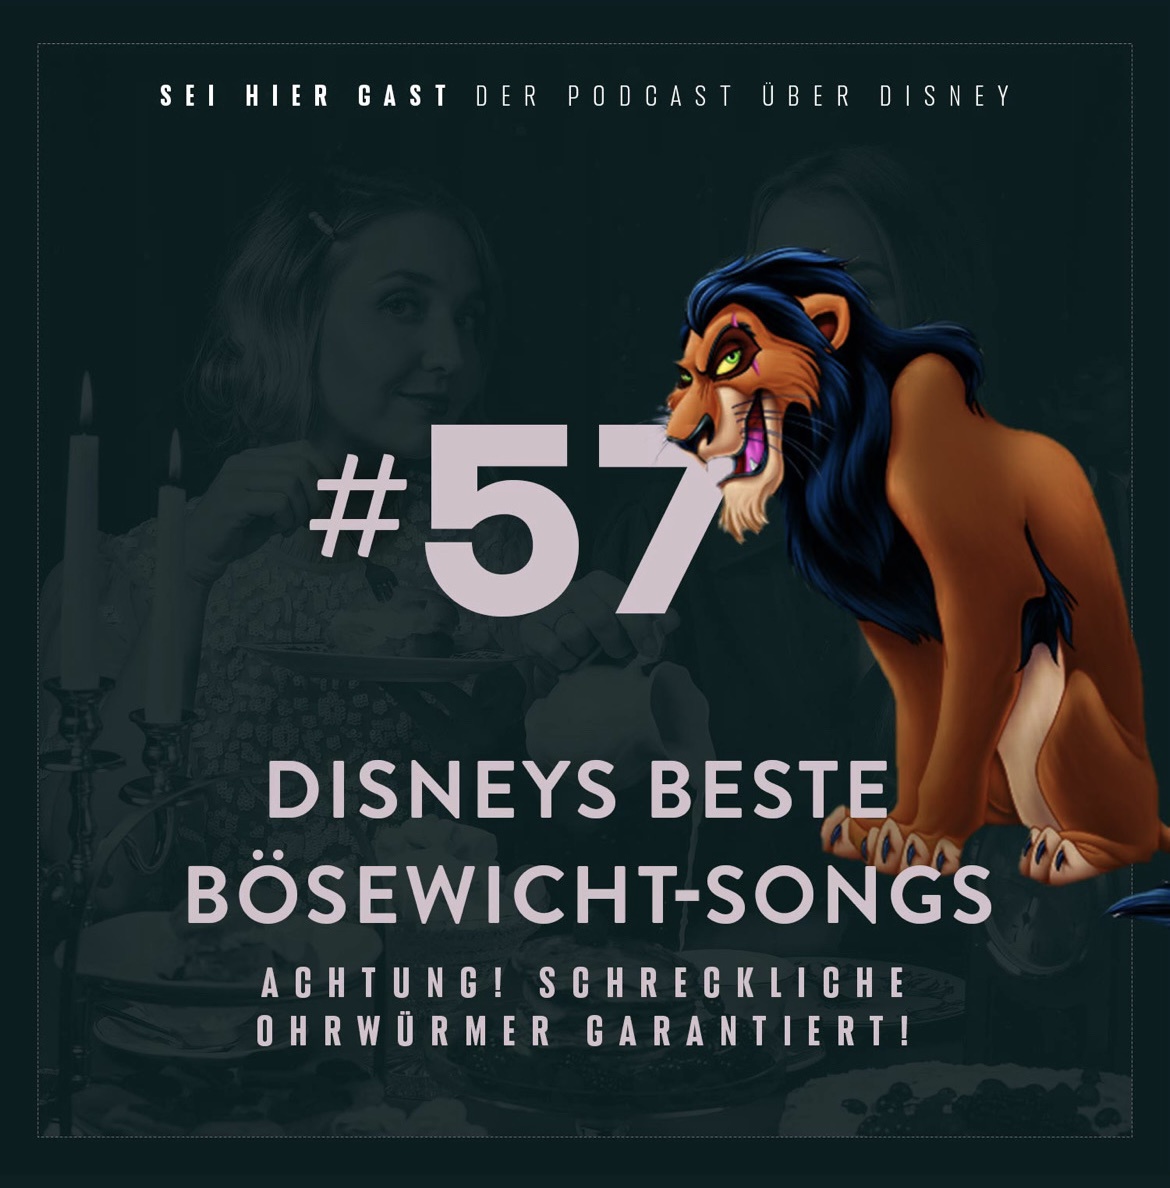 #57 Disneys beste Bösewicht-Songs I Achtung! Schreckliche Ohrwürmer garantiert!